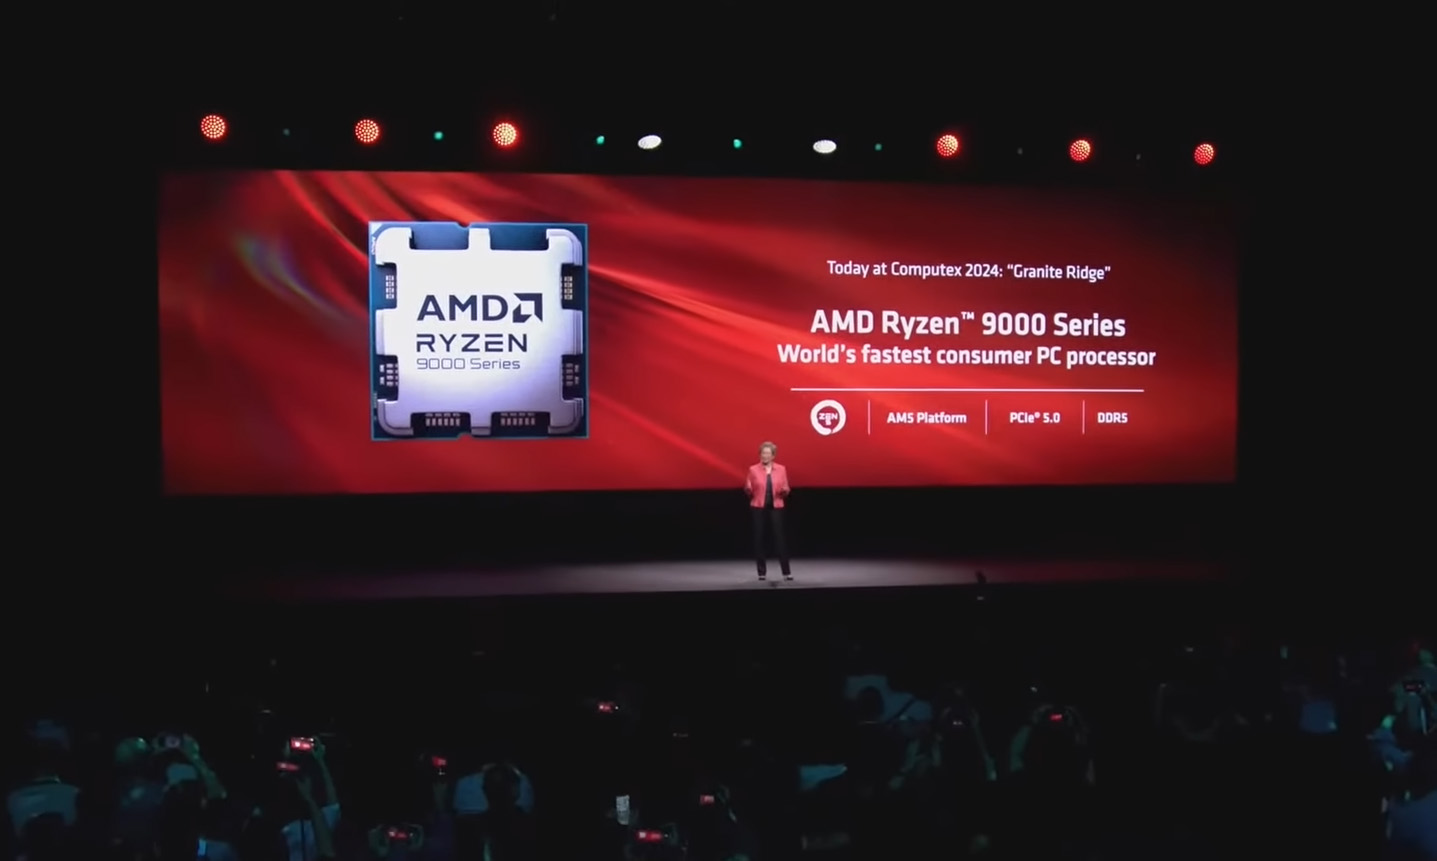 एएमडी सीईओ लिसा सु ने नए राइजेन 9000 सीरीज डेस्कटॉप सीपीयू की घोषणा की।